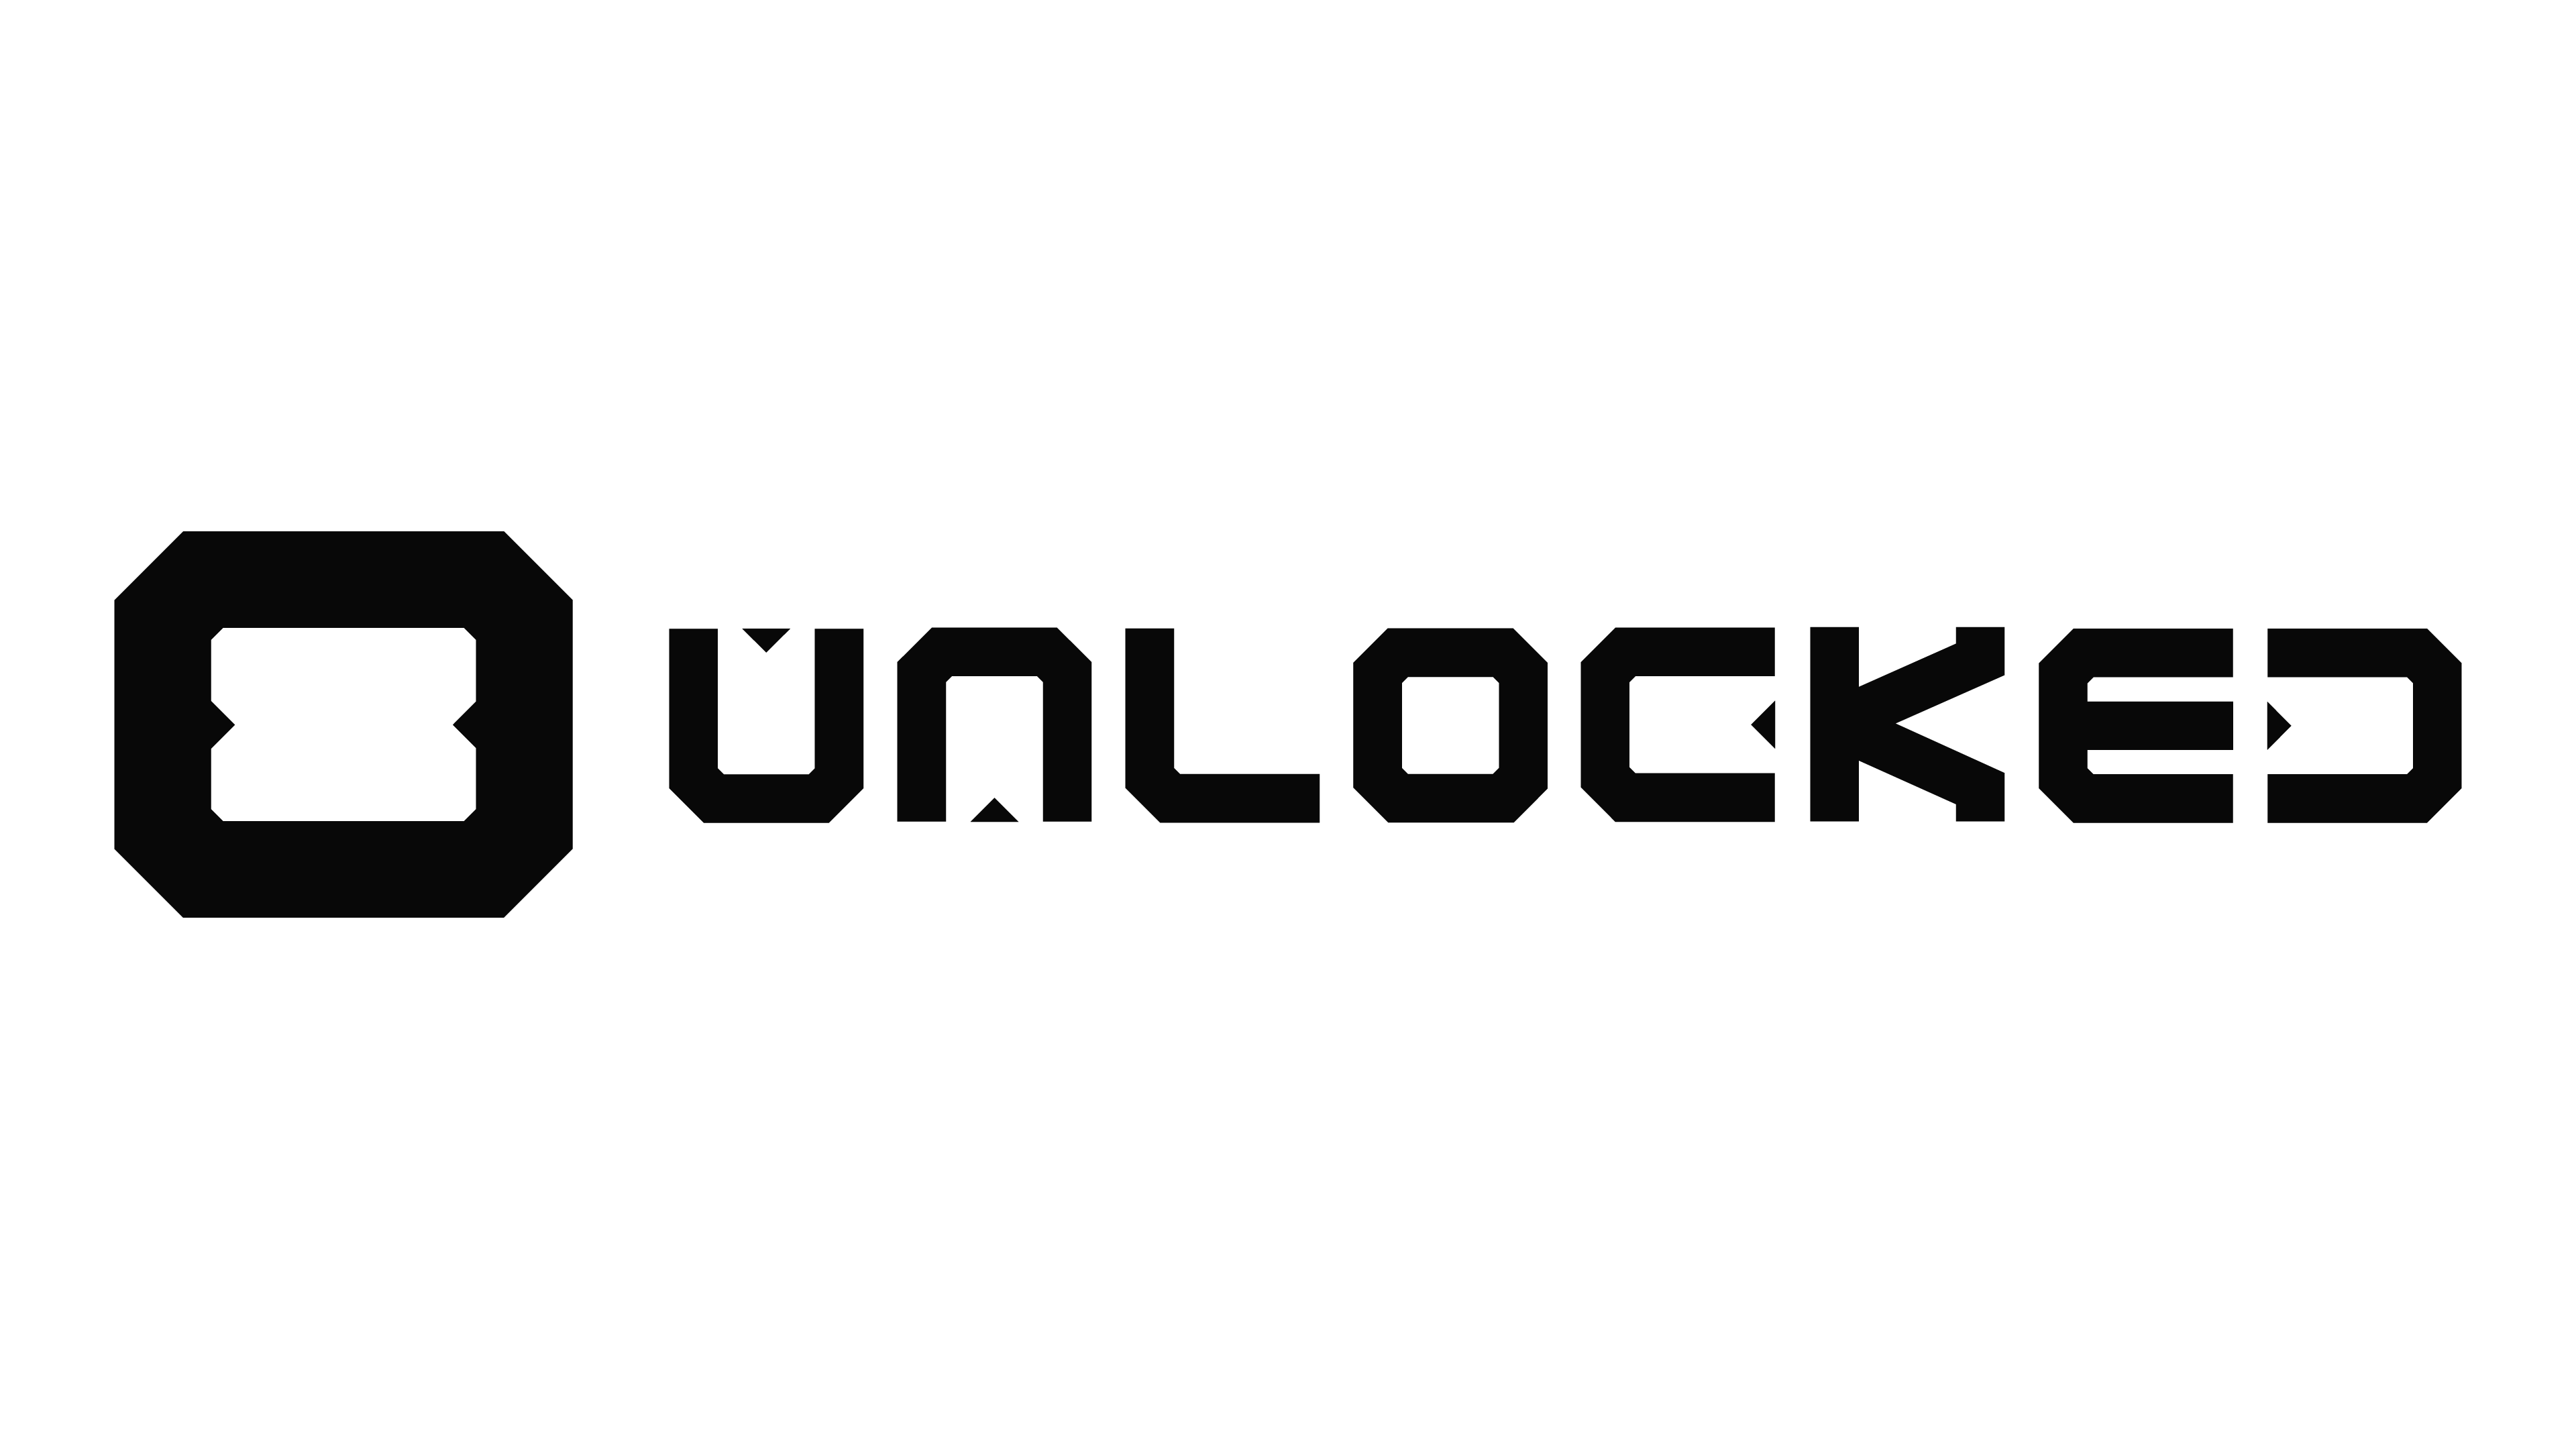 unlocked_lockup_solidcolor_light_horizontal